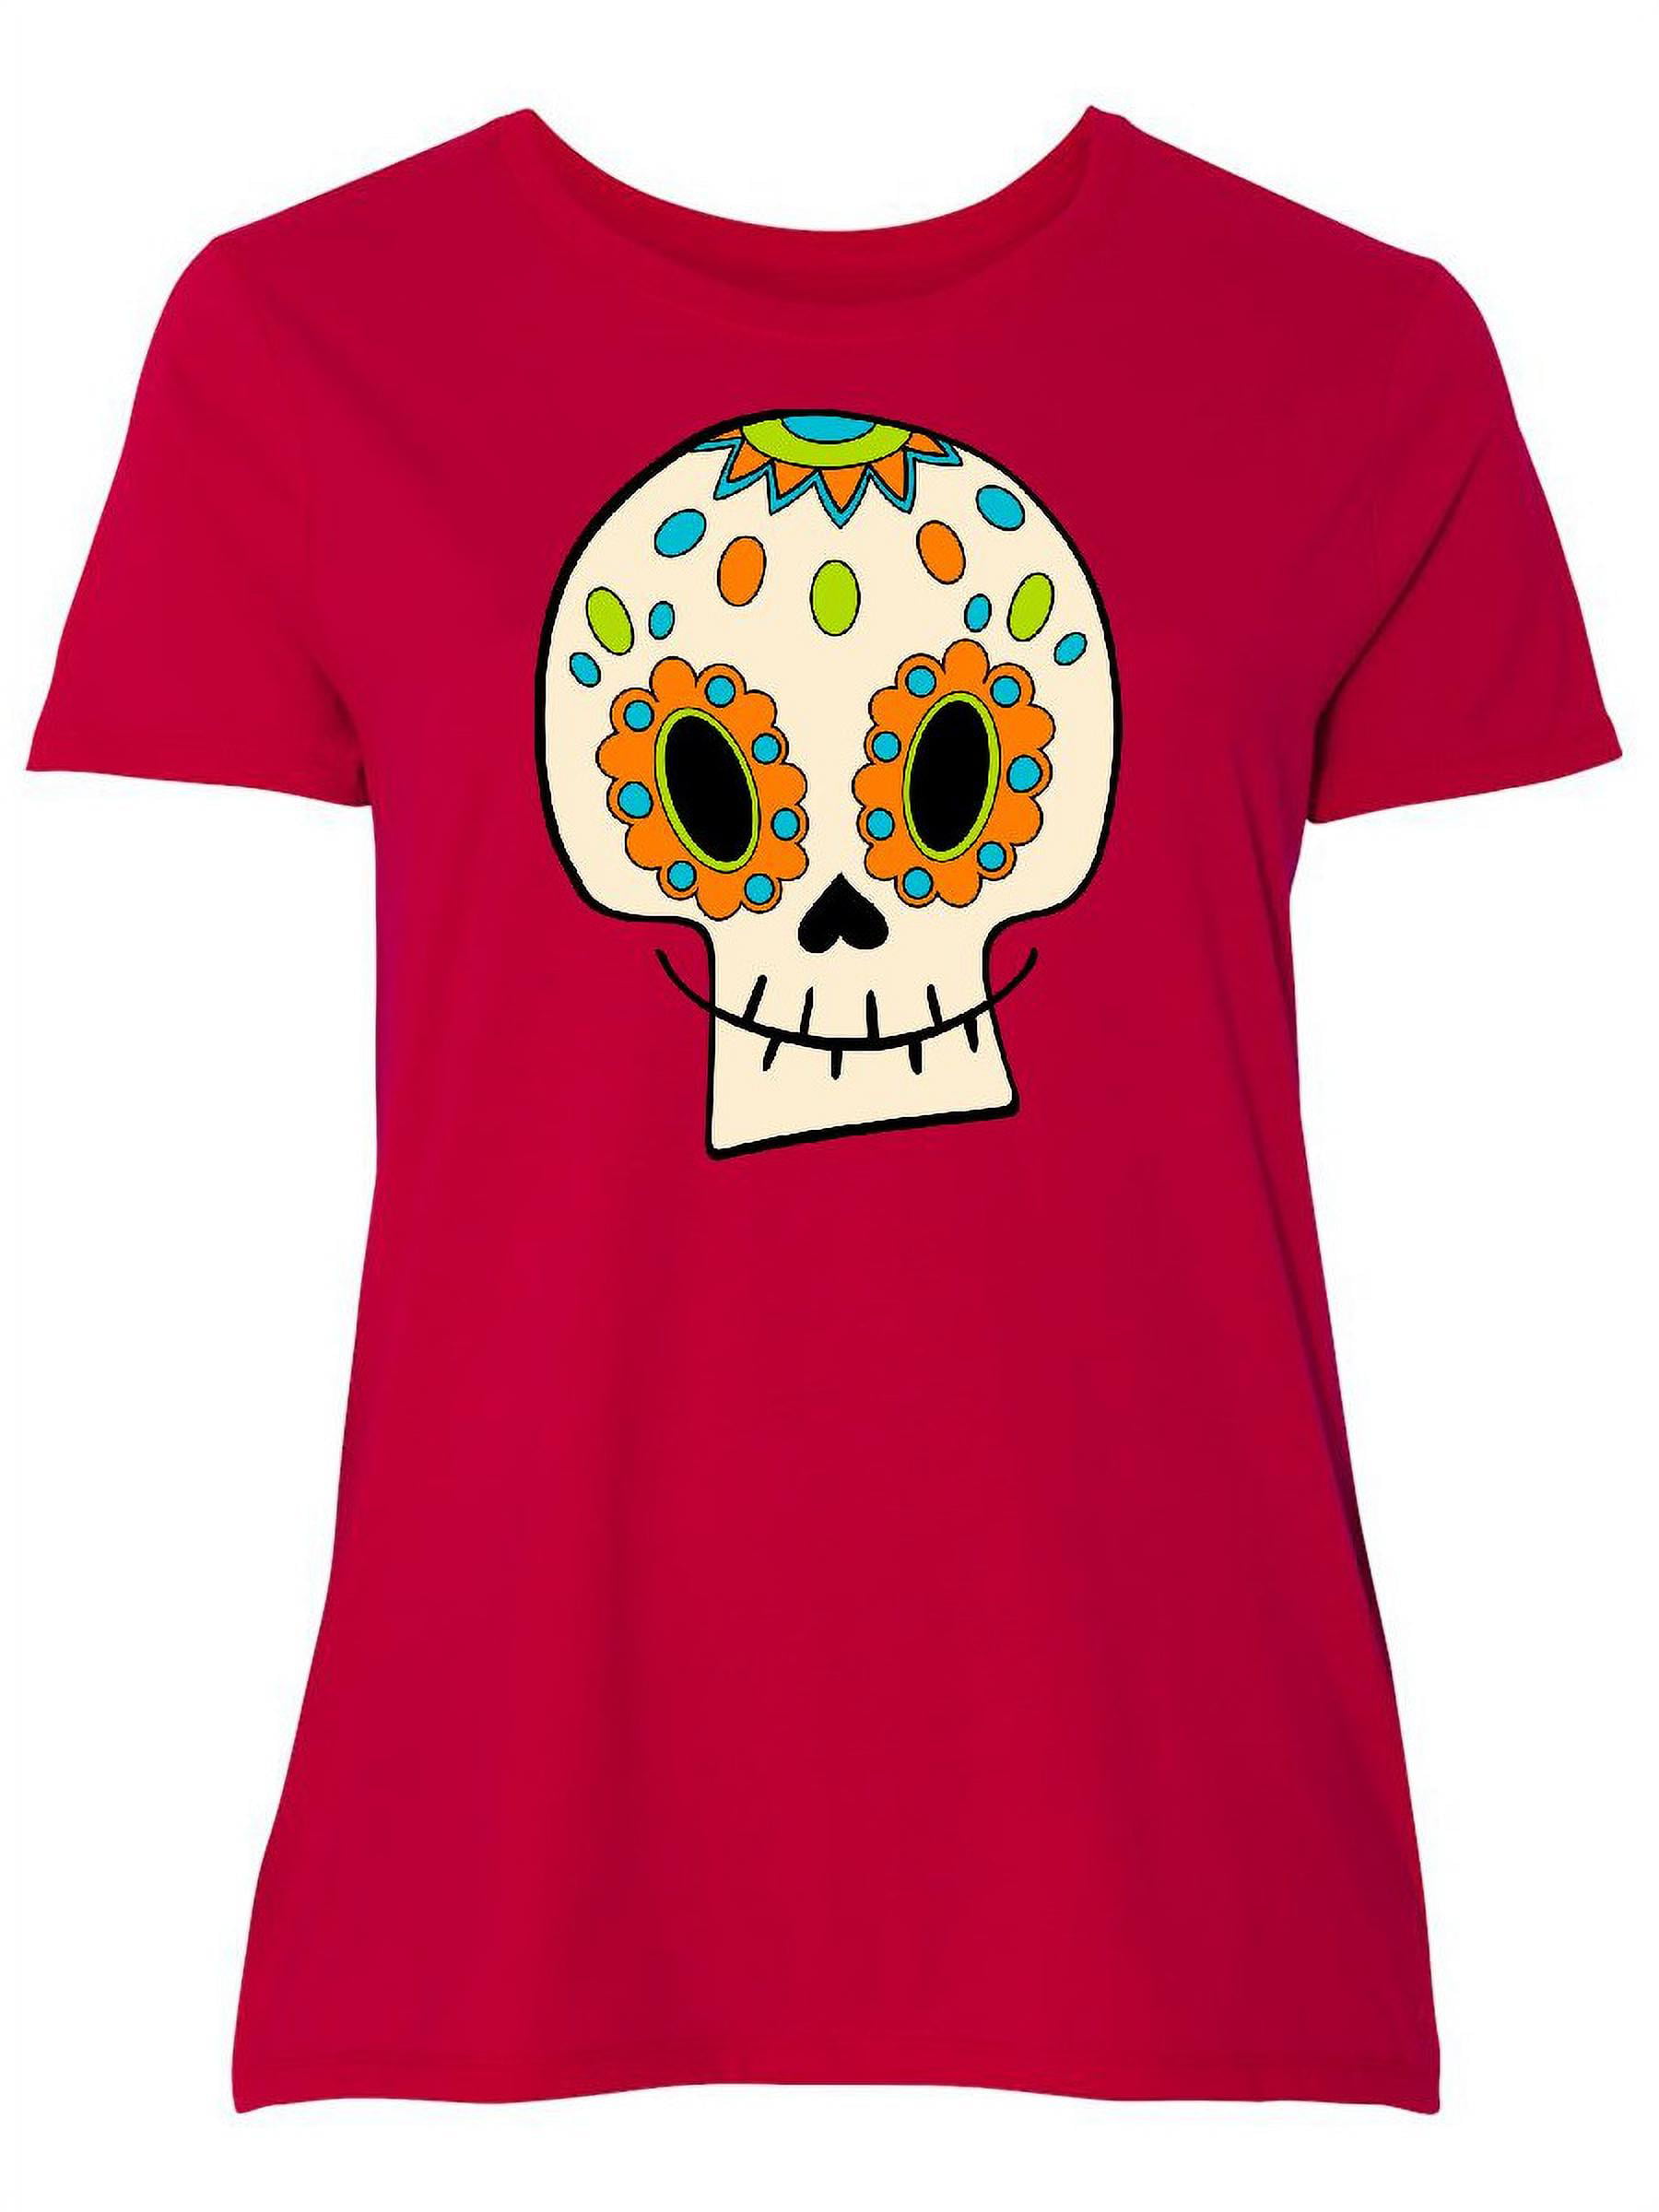 Sugar Skull Saint Patricks Day of Dead T-Shirt Size S-5XL